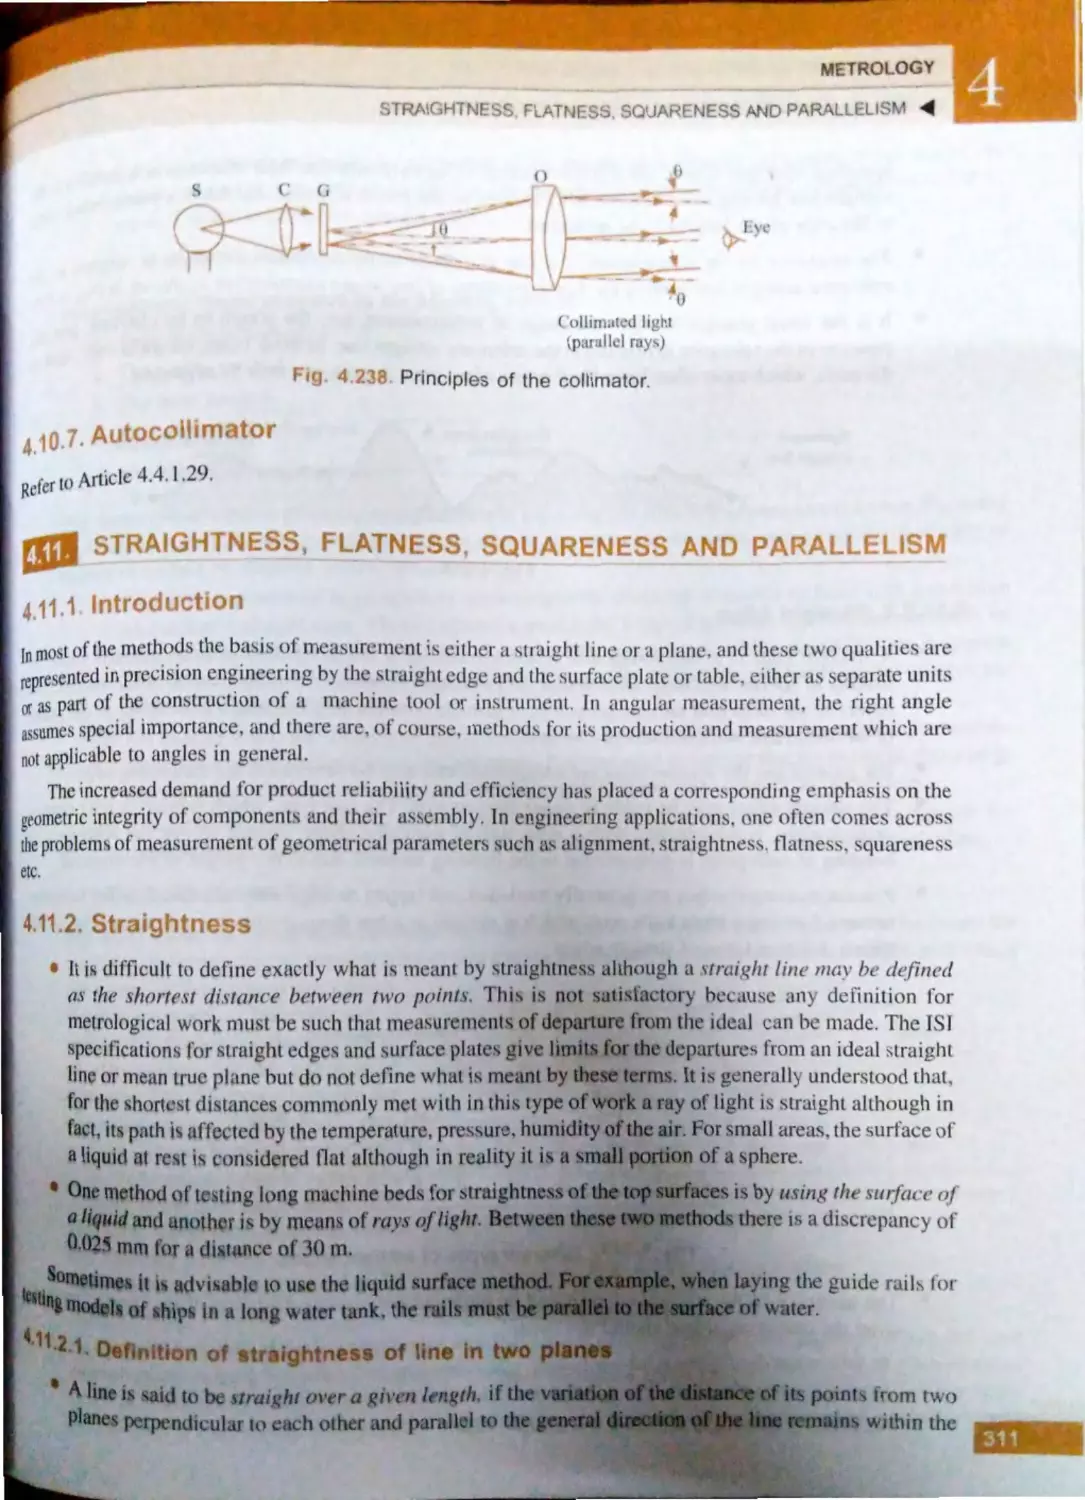 4.10.7. Autocollimator
4.11. Straightness, Flatness, Squareness and Parallelism
4.11.2. Straightness